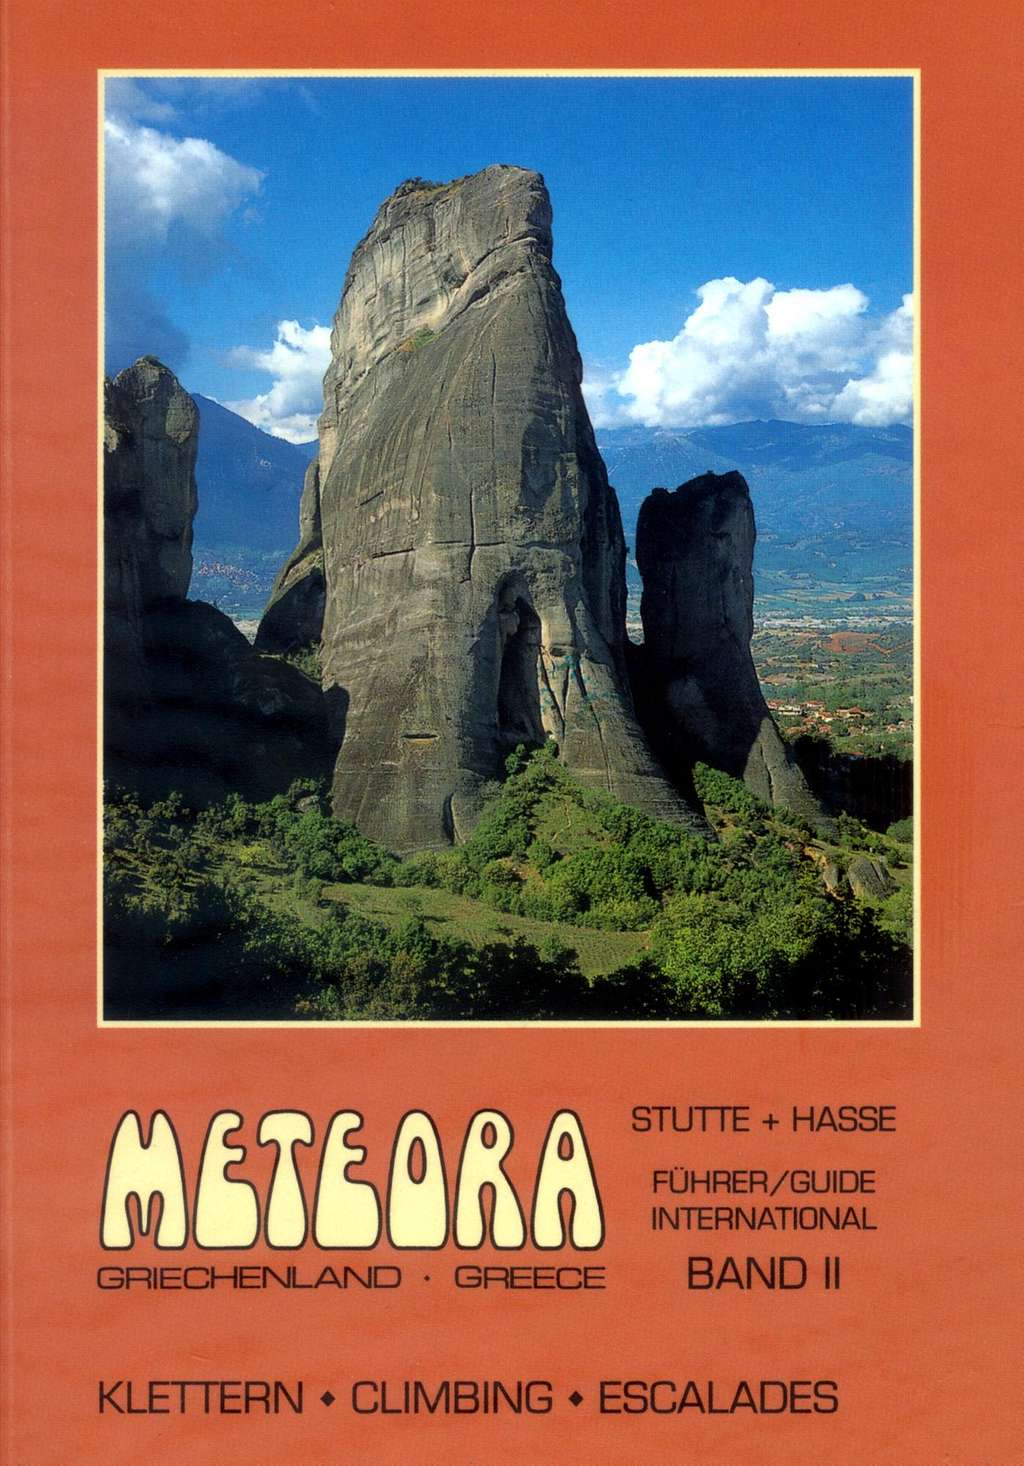 Meteora Guidebook